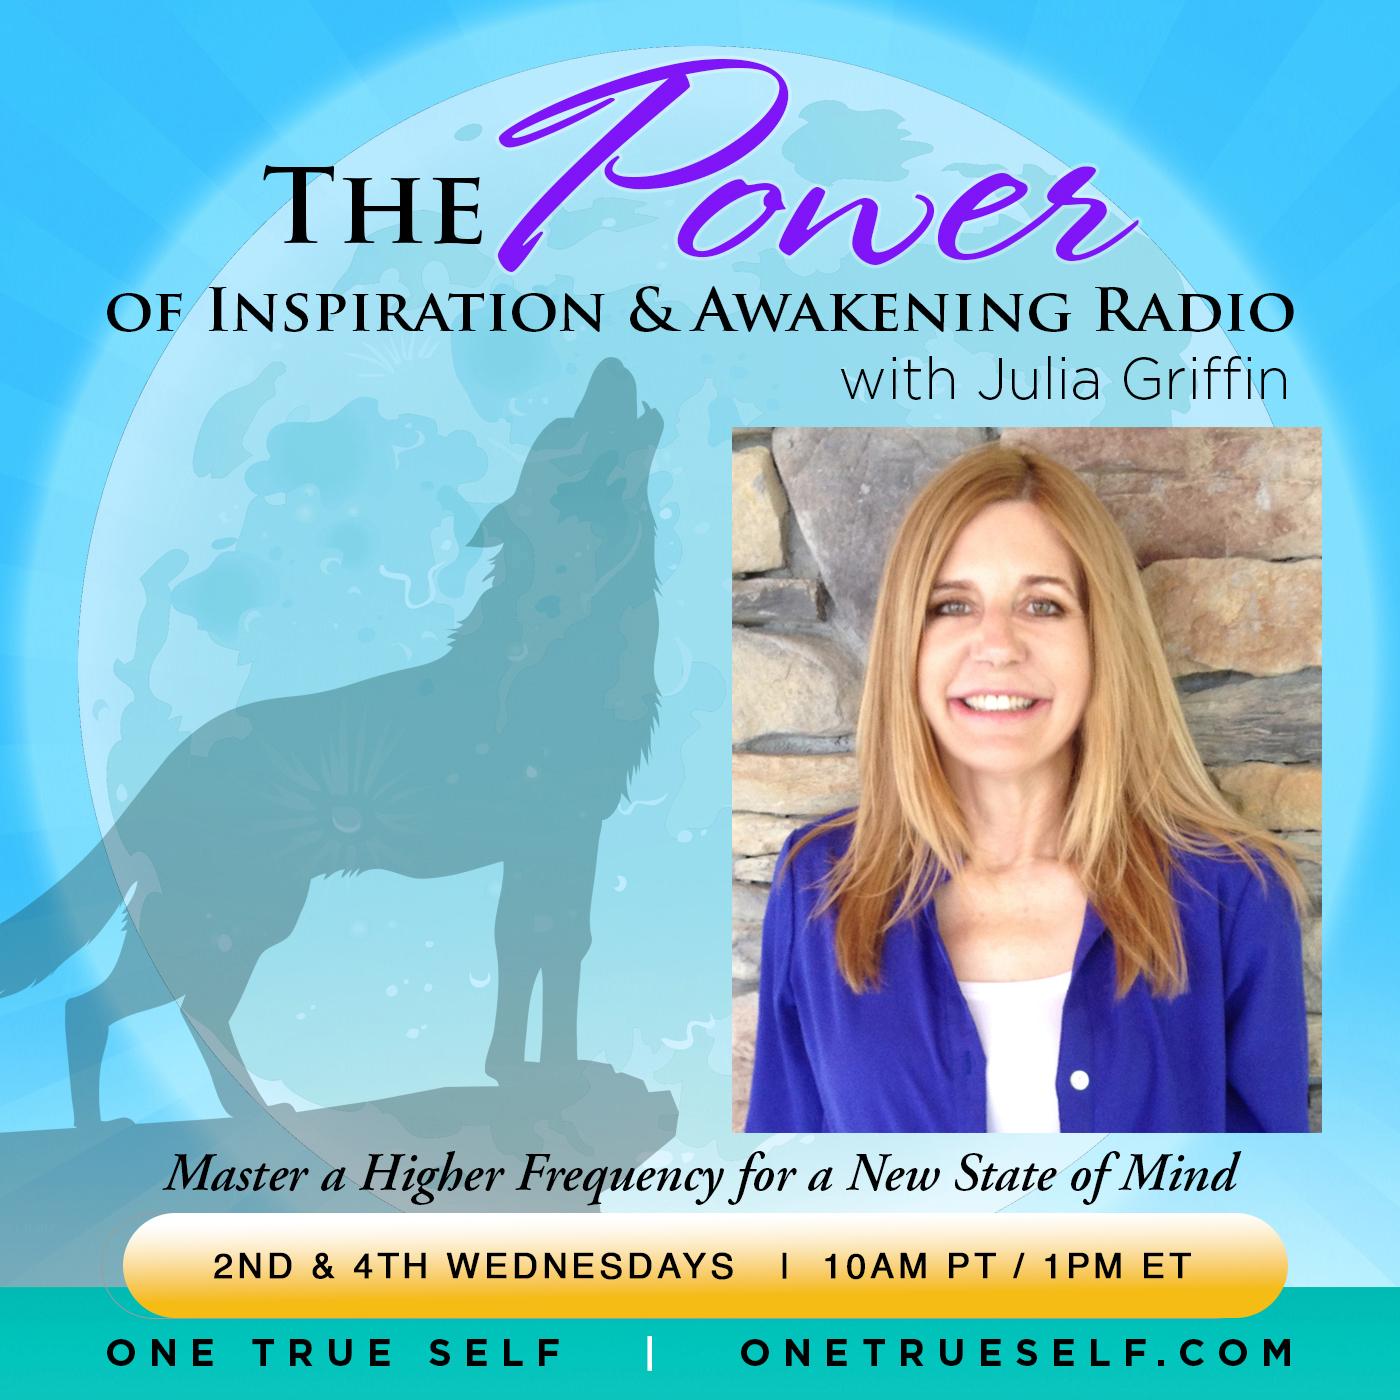 The Power of Inspiration & Awakening Radio with Julia Griffin